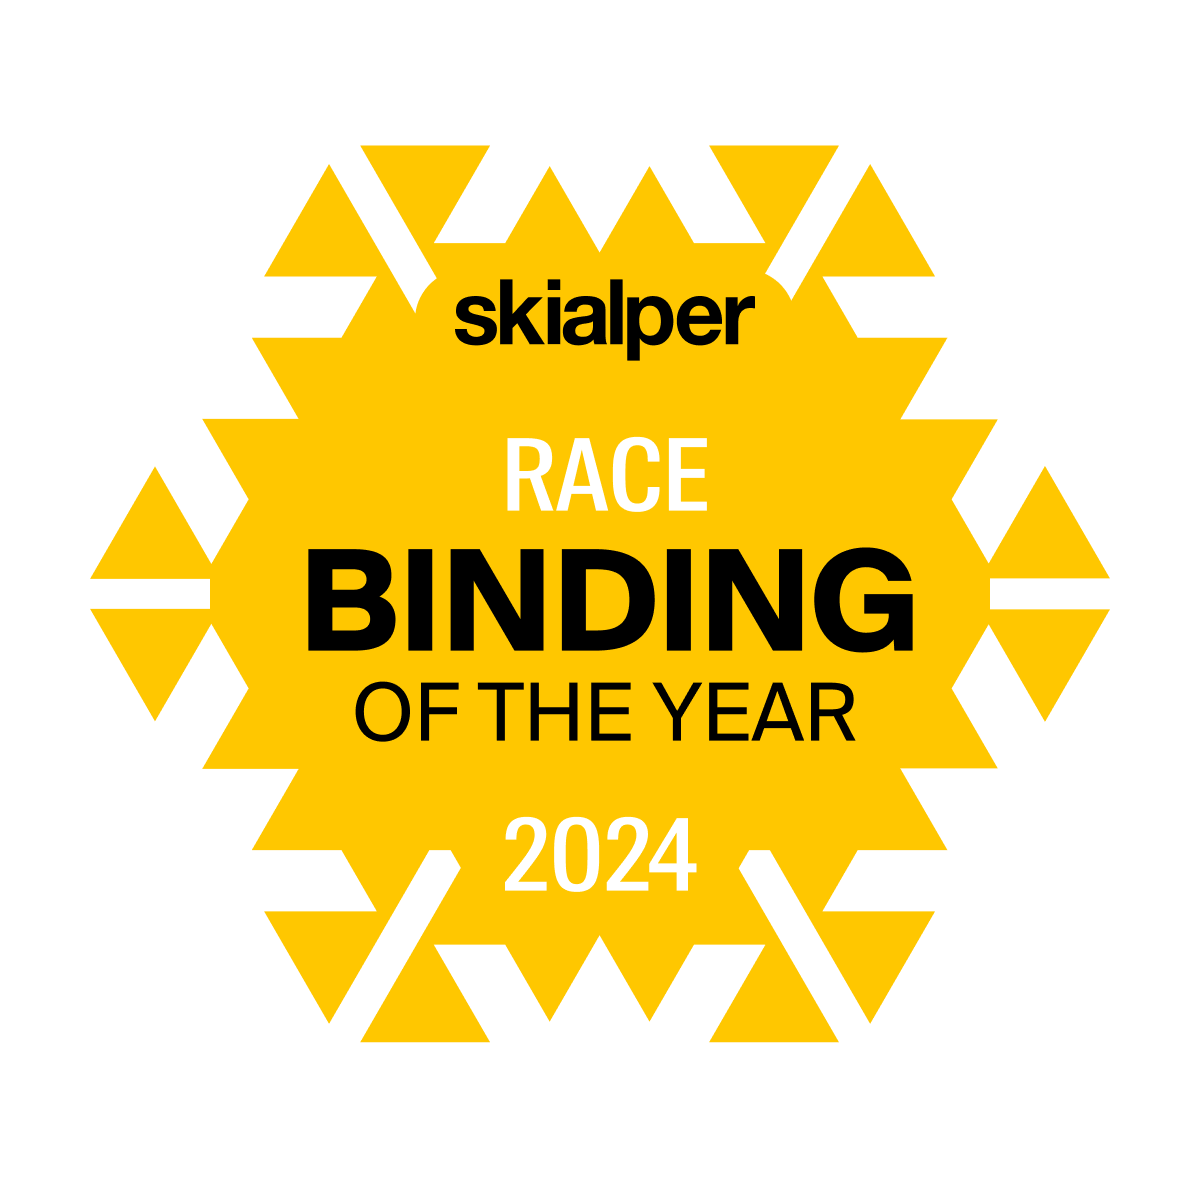 Binding of the year Race